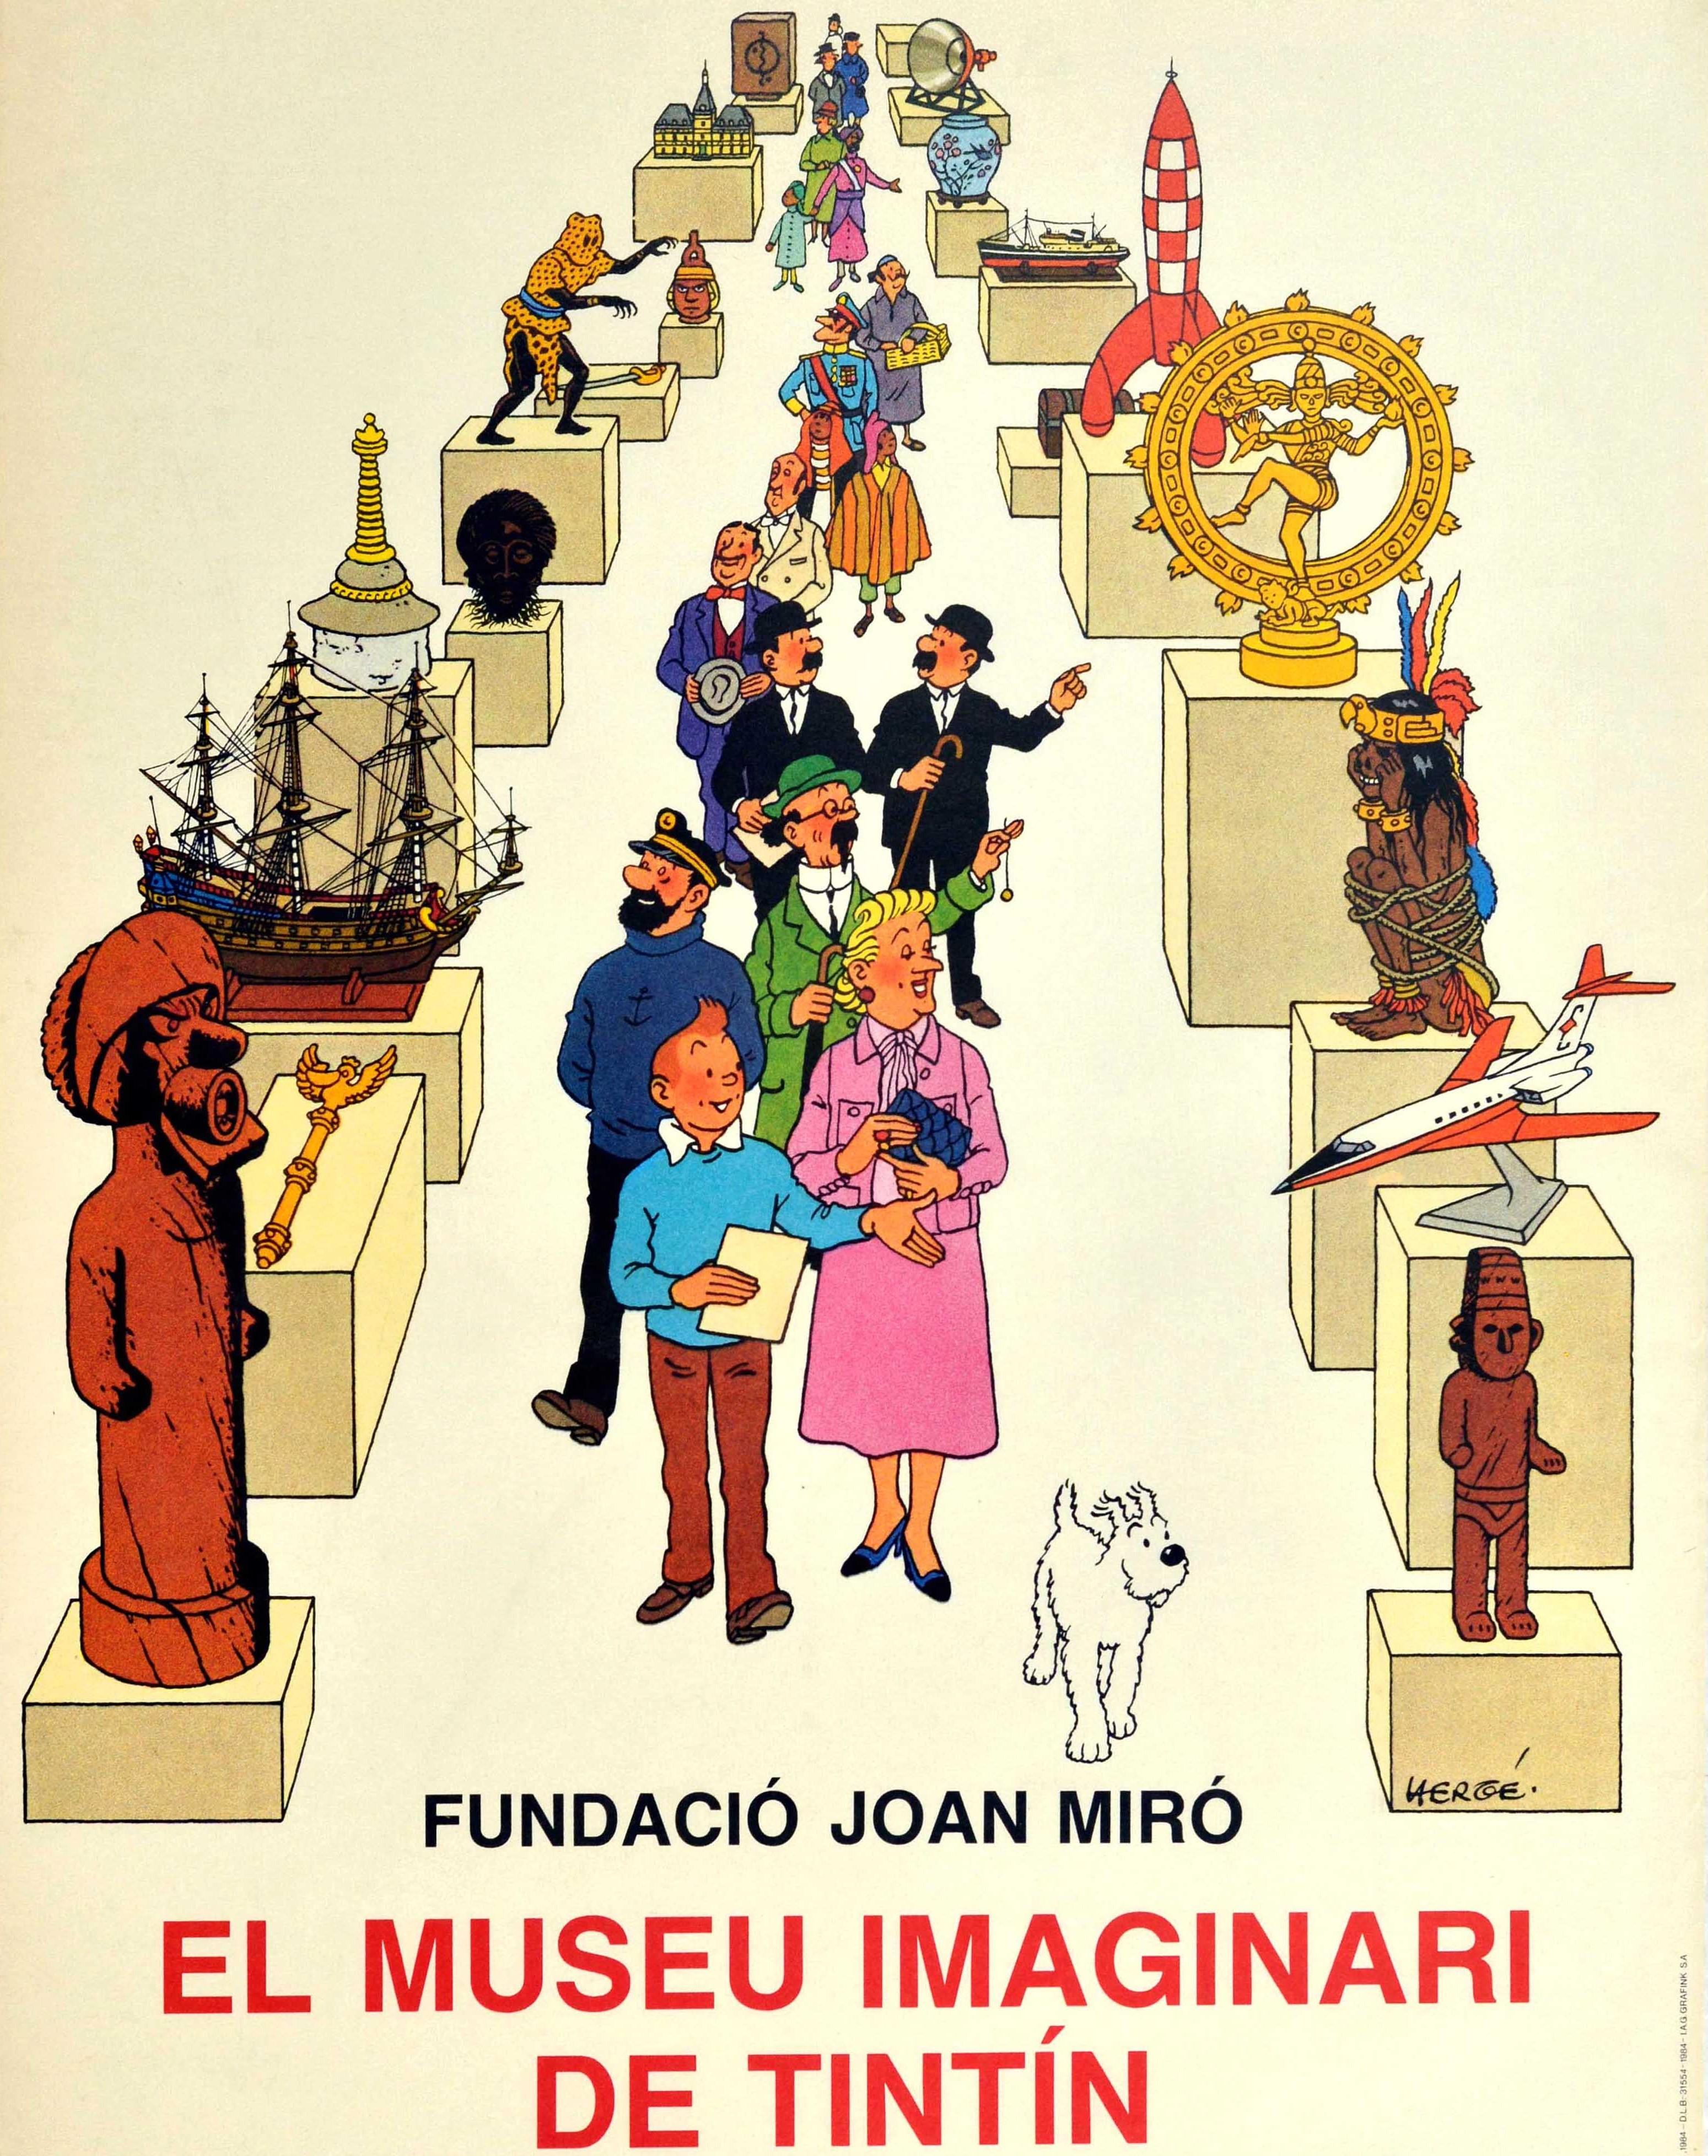 Spanish Original Vintage Poster Imaginary Museum Of Tintin Exhibition Fundacio Joan Miro